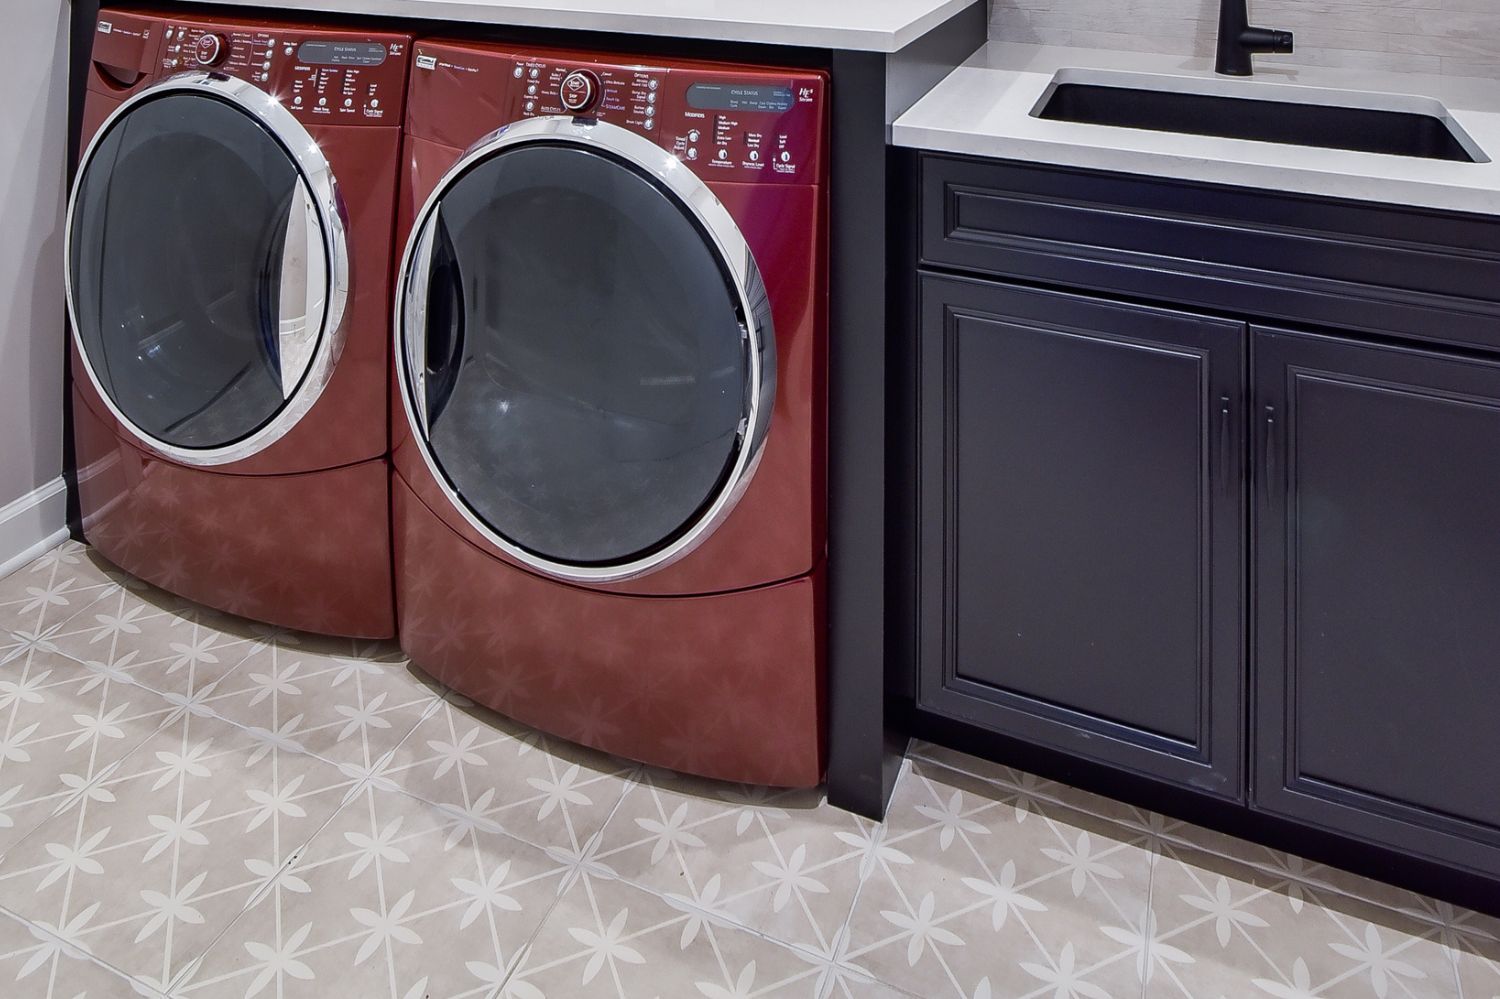 Naperville-Laundry-White-Cabinetry-Dark-Cabinets-Floor-Tiles-1_Sebring-Design-Build